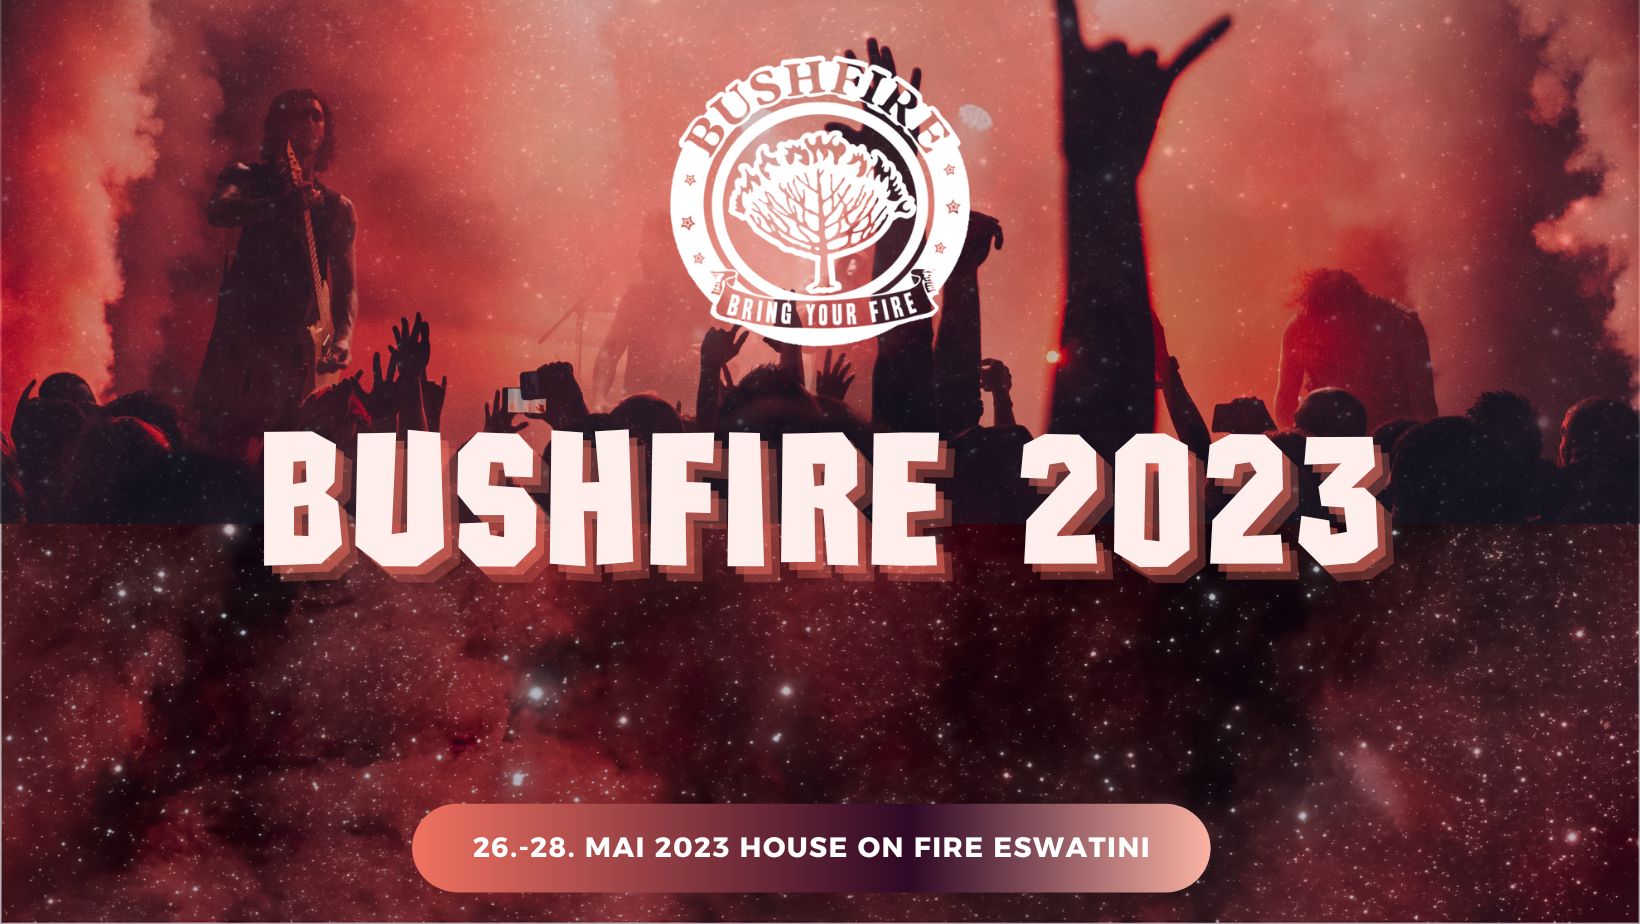 Bushfire 2023